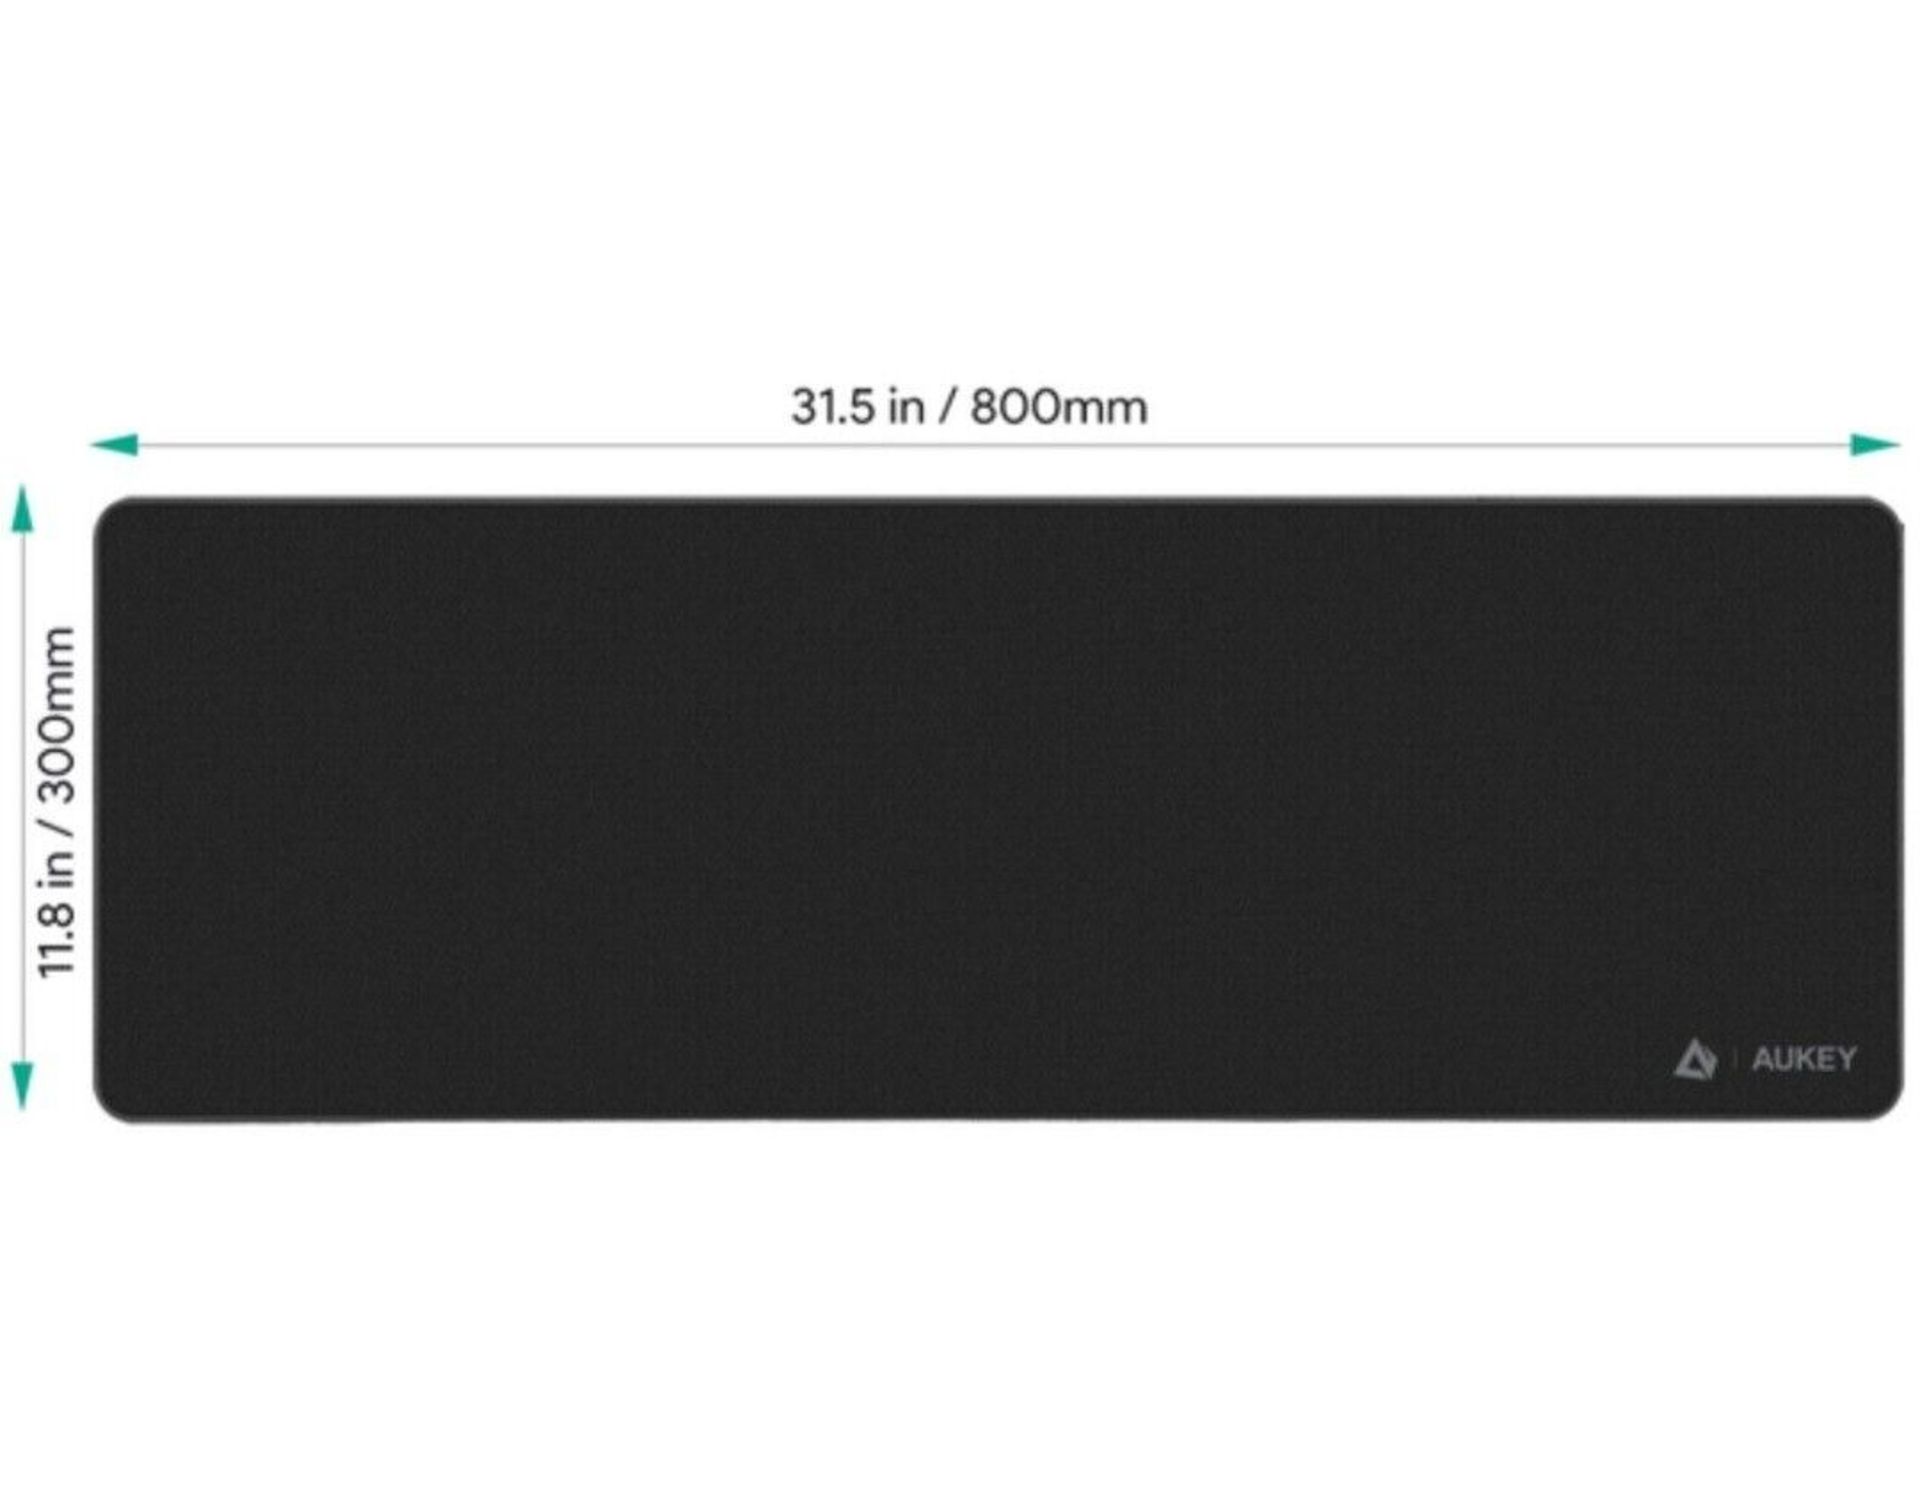 800 X AUKEY KM-P2 MOUSE PAD BLACK 800 X 300 X 4 - LARGE - Image 2 of 7